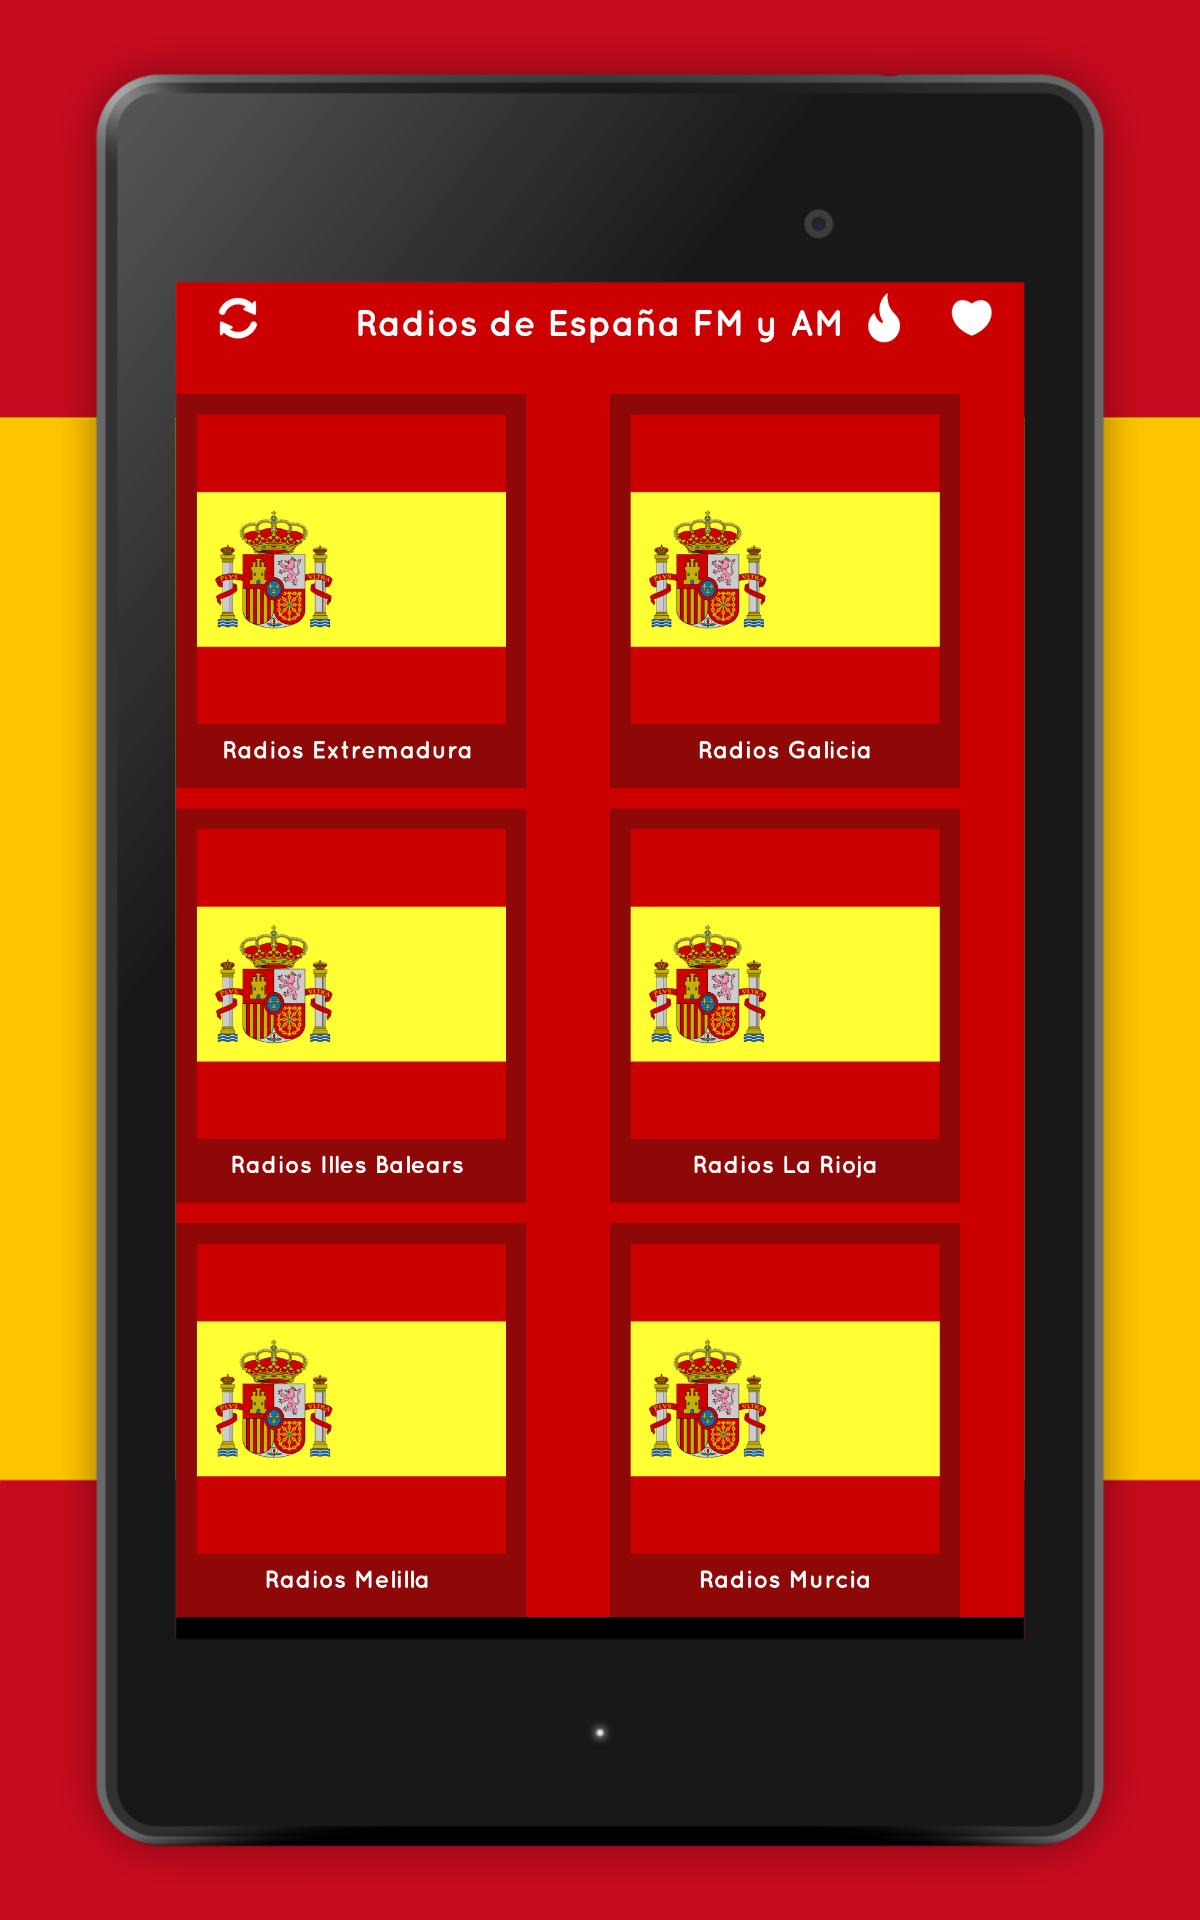 Radios de España - Emisoras de Radio Españolas FM for Android - APK Download